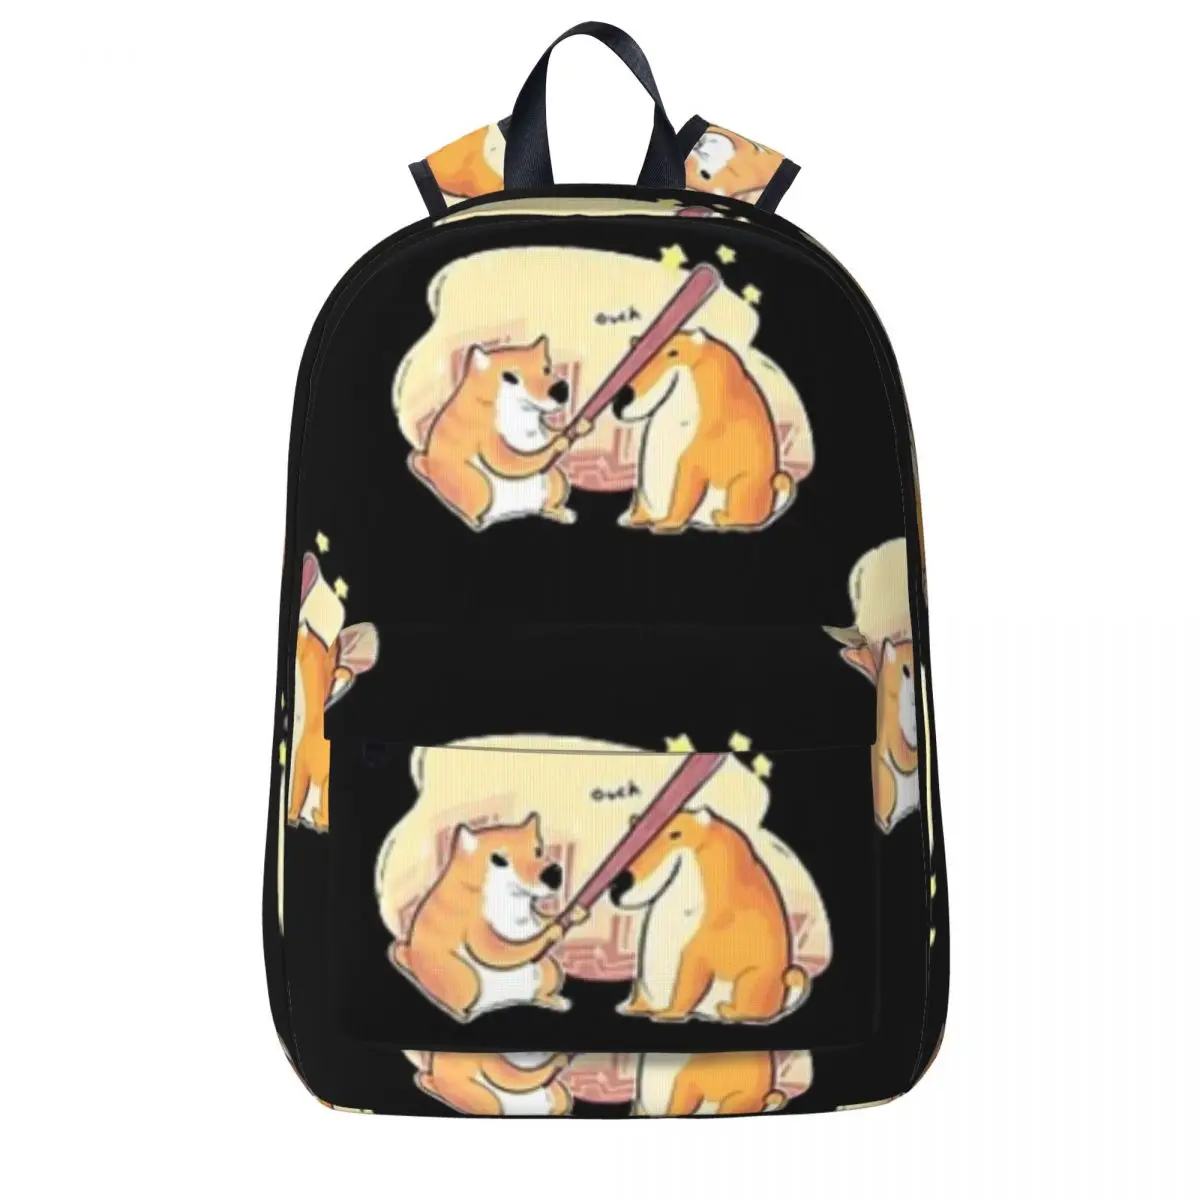 

Dog - Ouch Backpack Waterproof Children School Bag Laptop Rucksack Travel Rucksack Large Capacity Bookbag